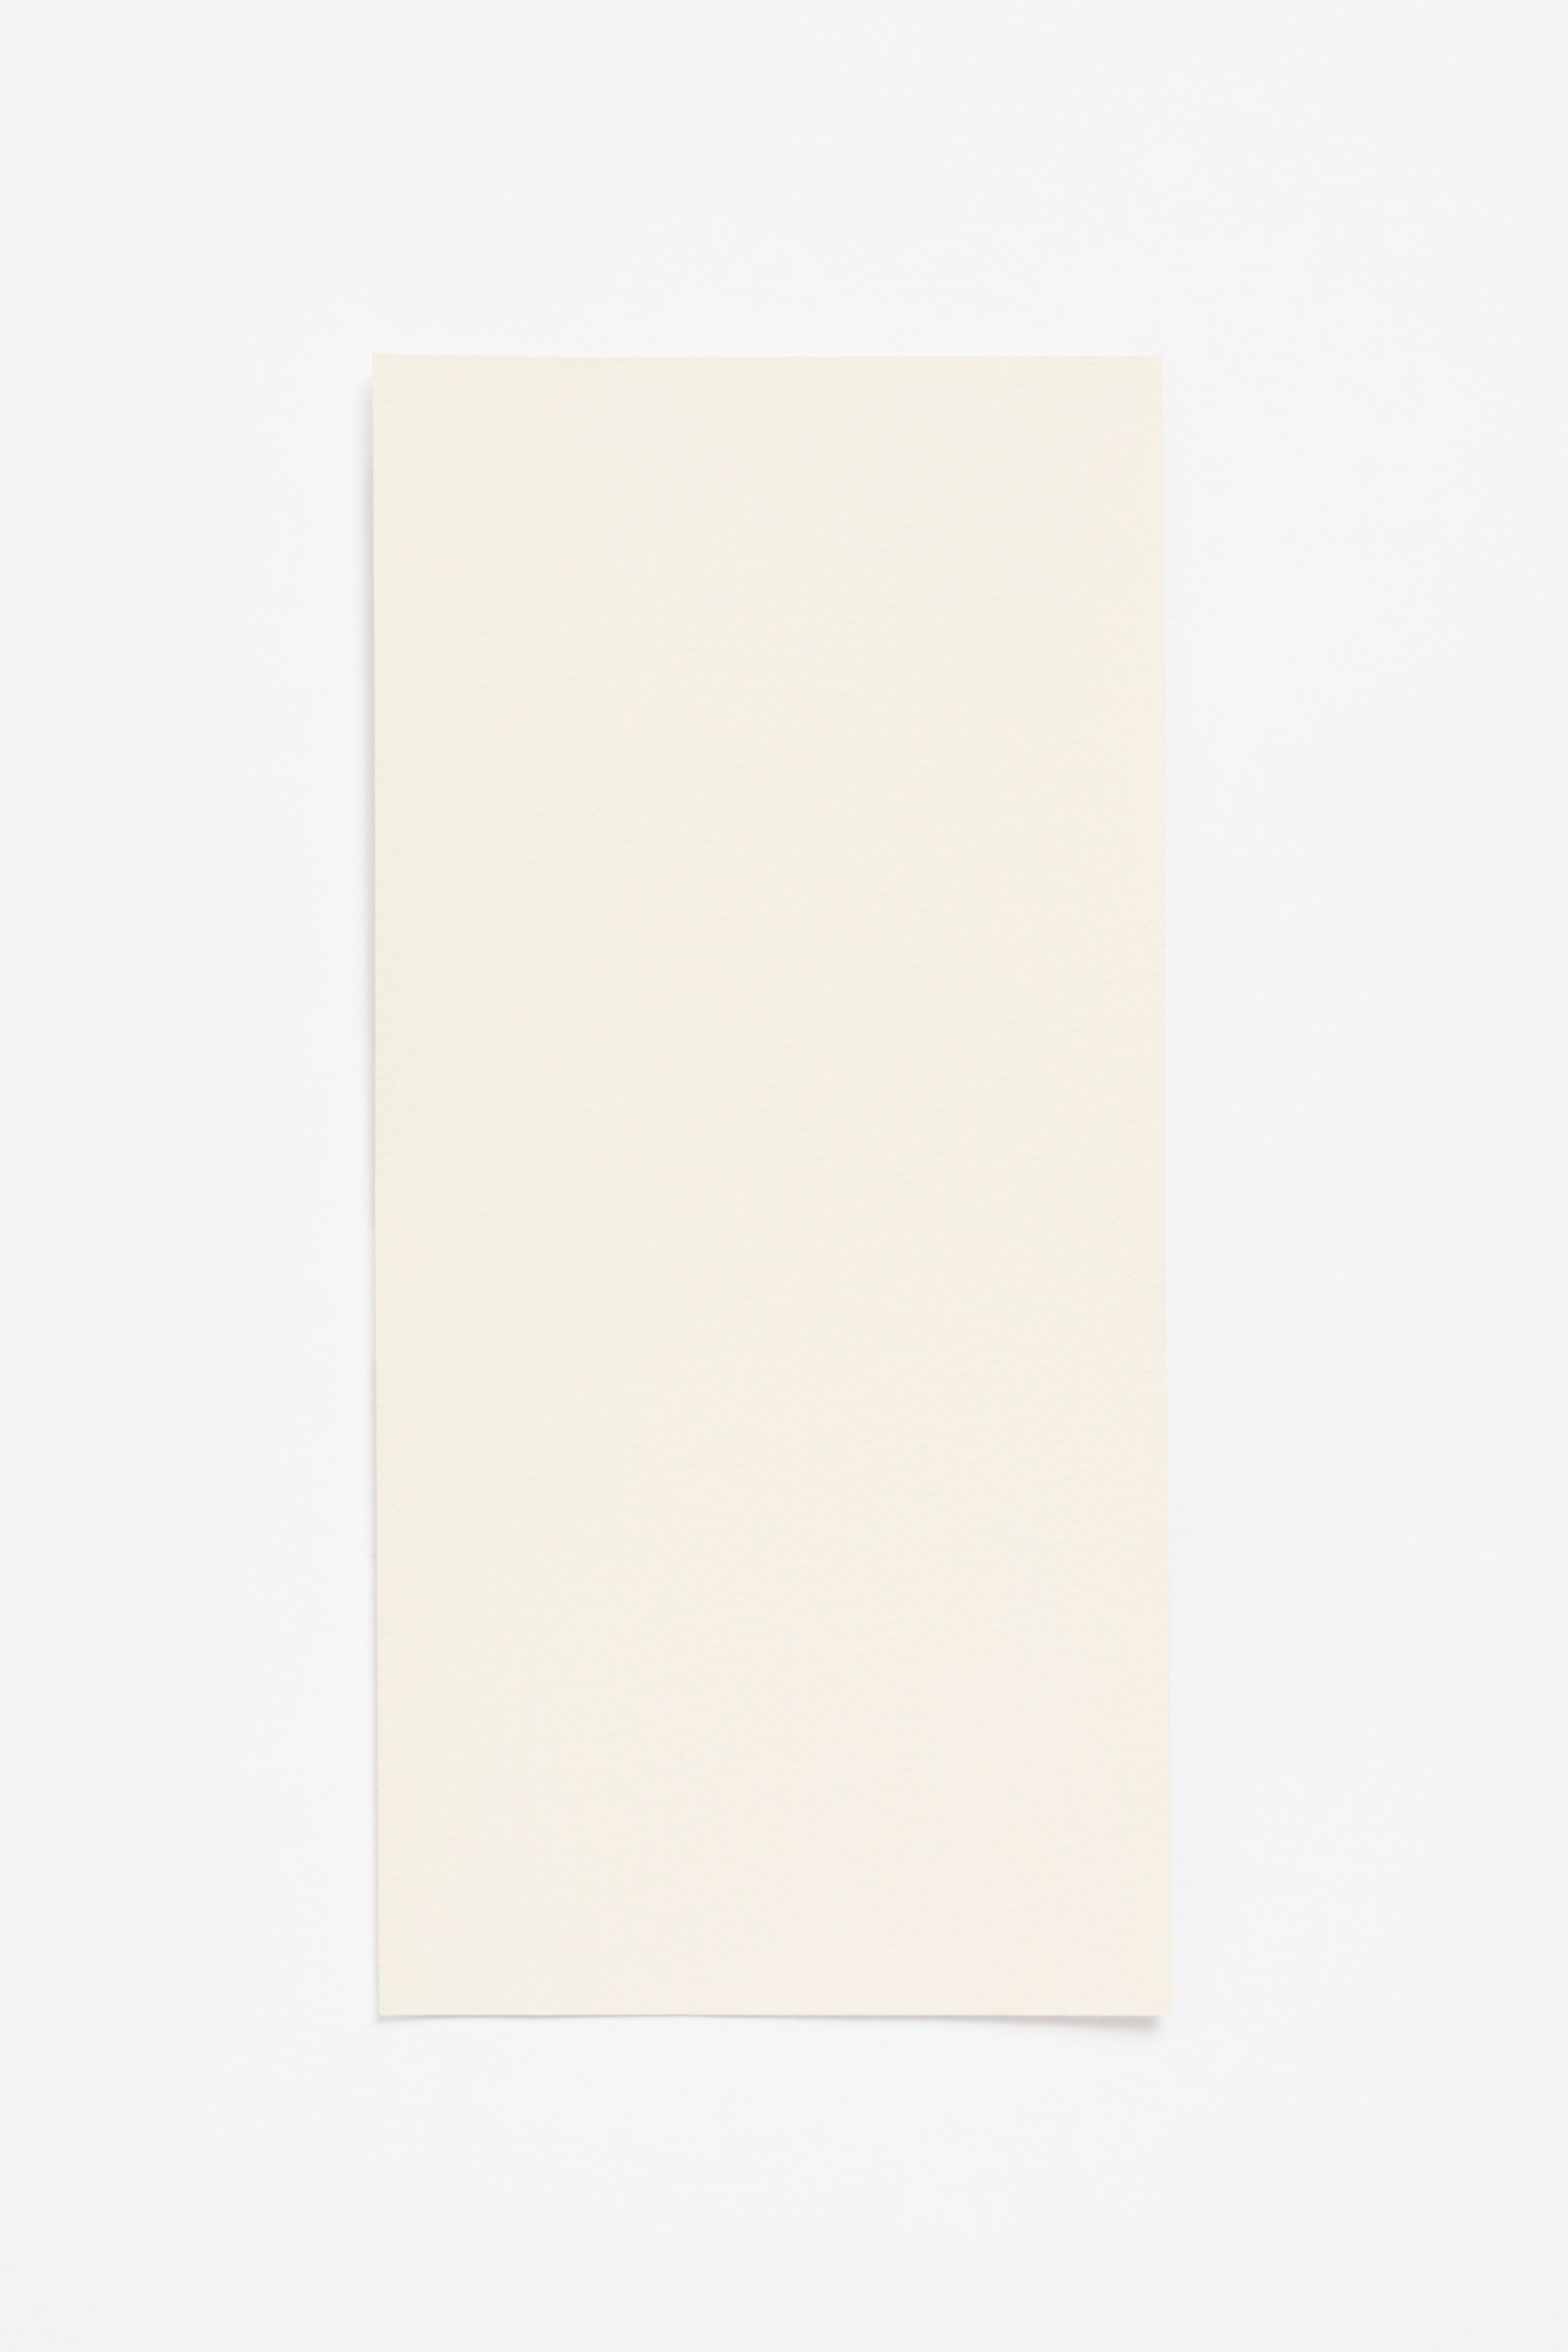 Blanc Moyen — a paint colour developed by Ronan Bouroullec for Blēo